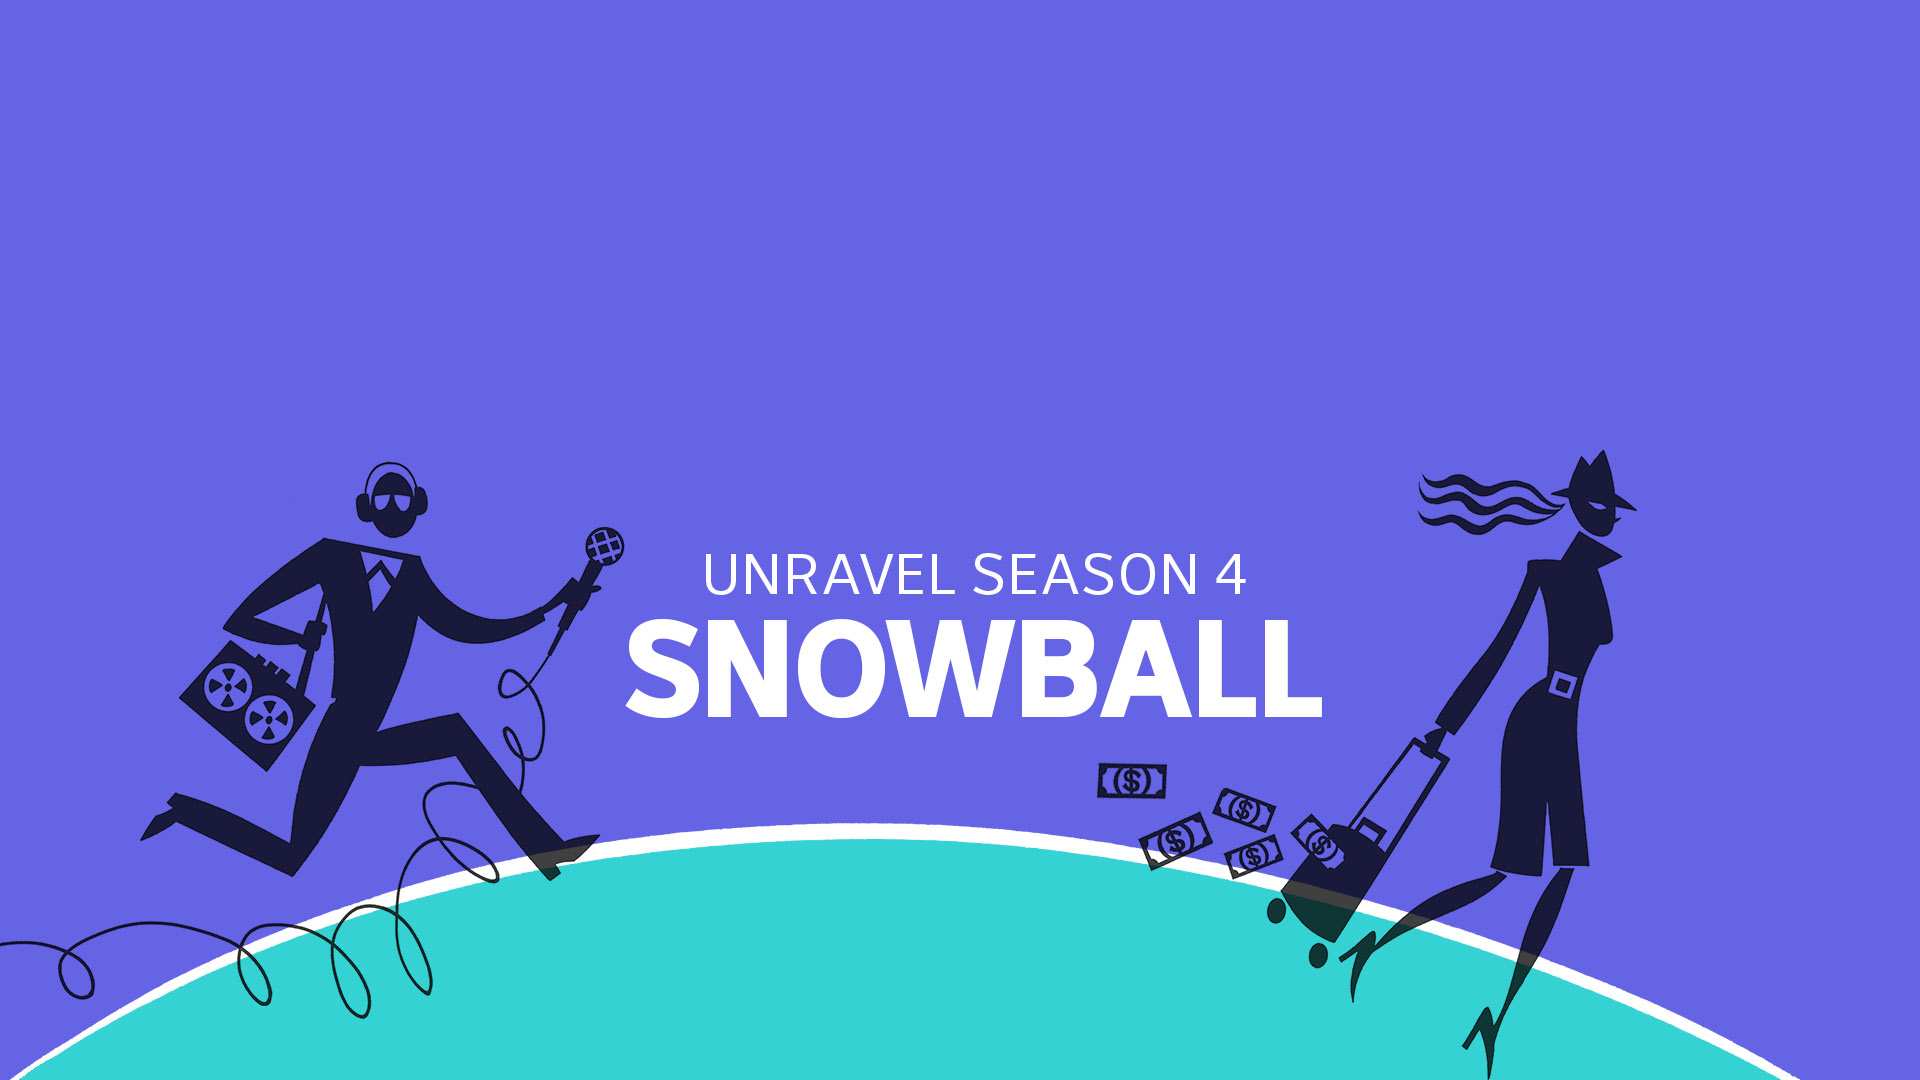 INTRODUCING — Snowball